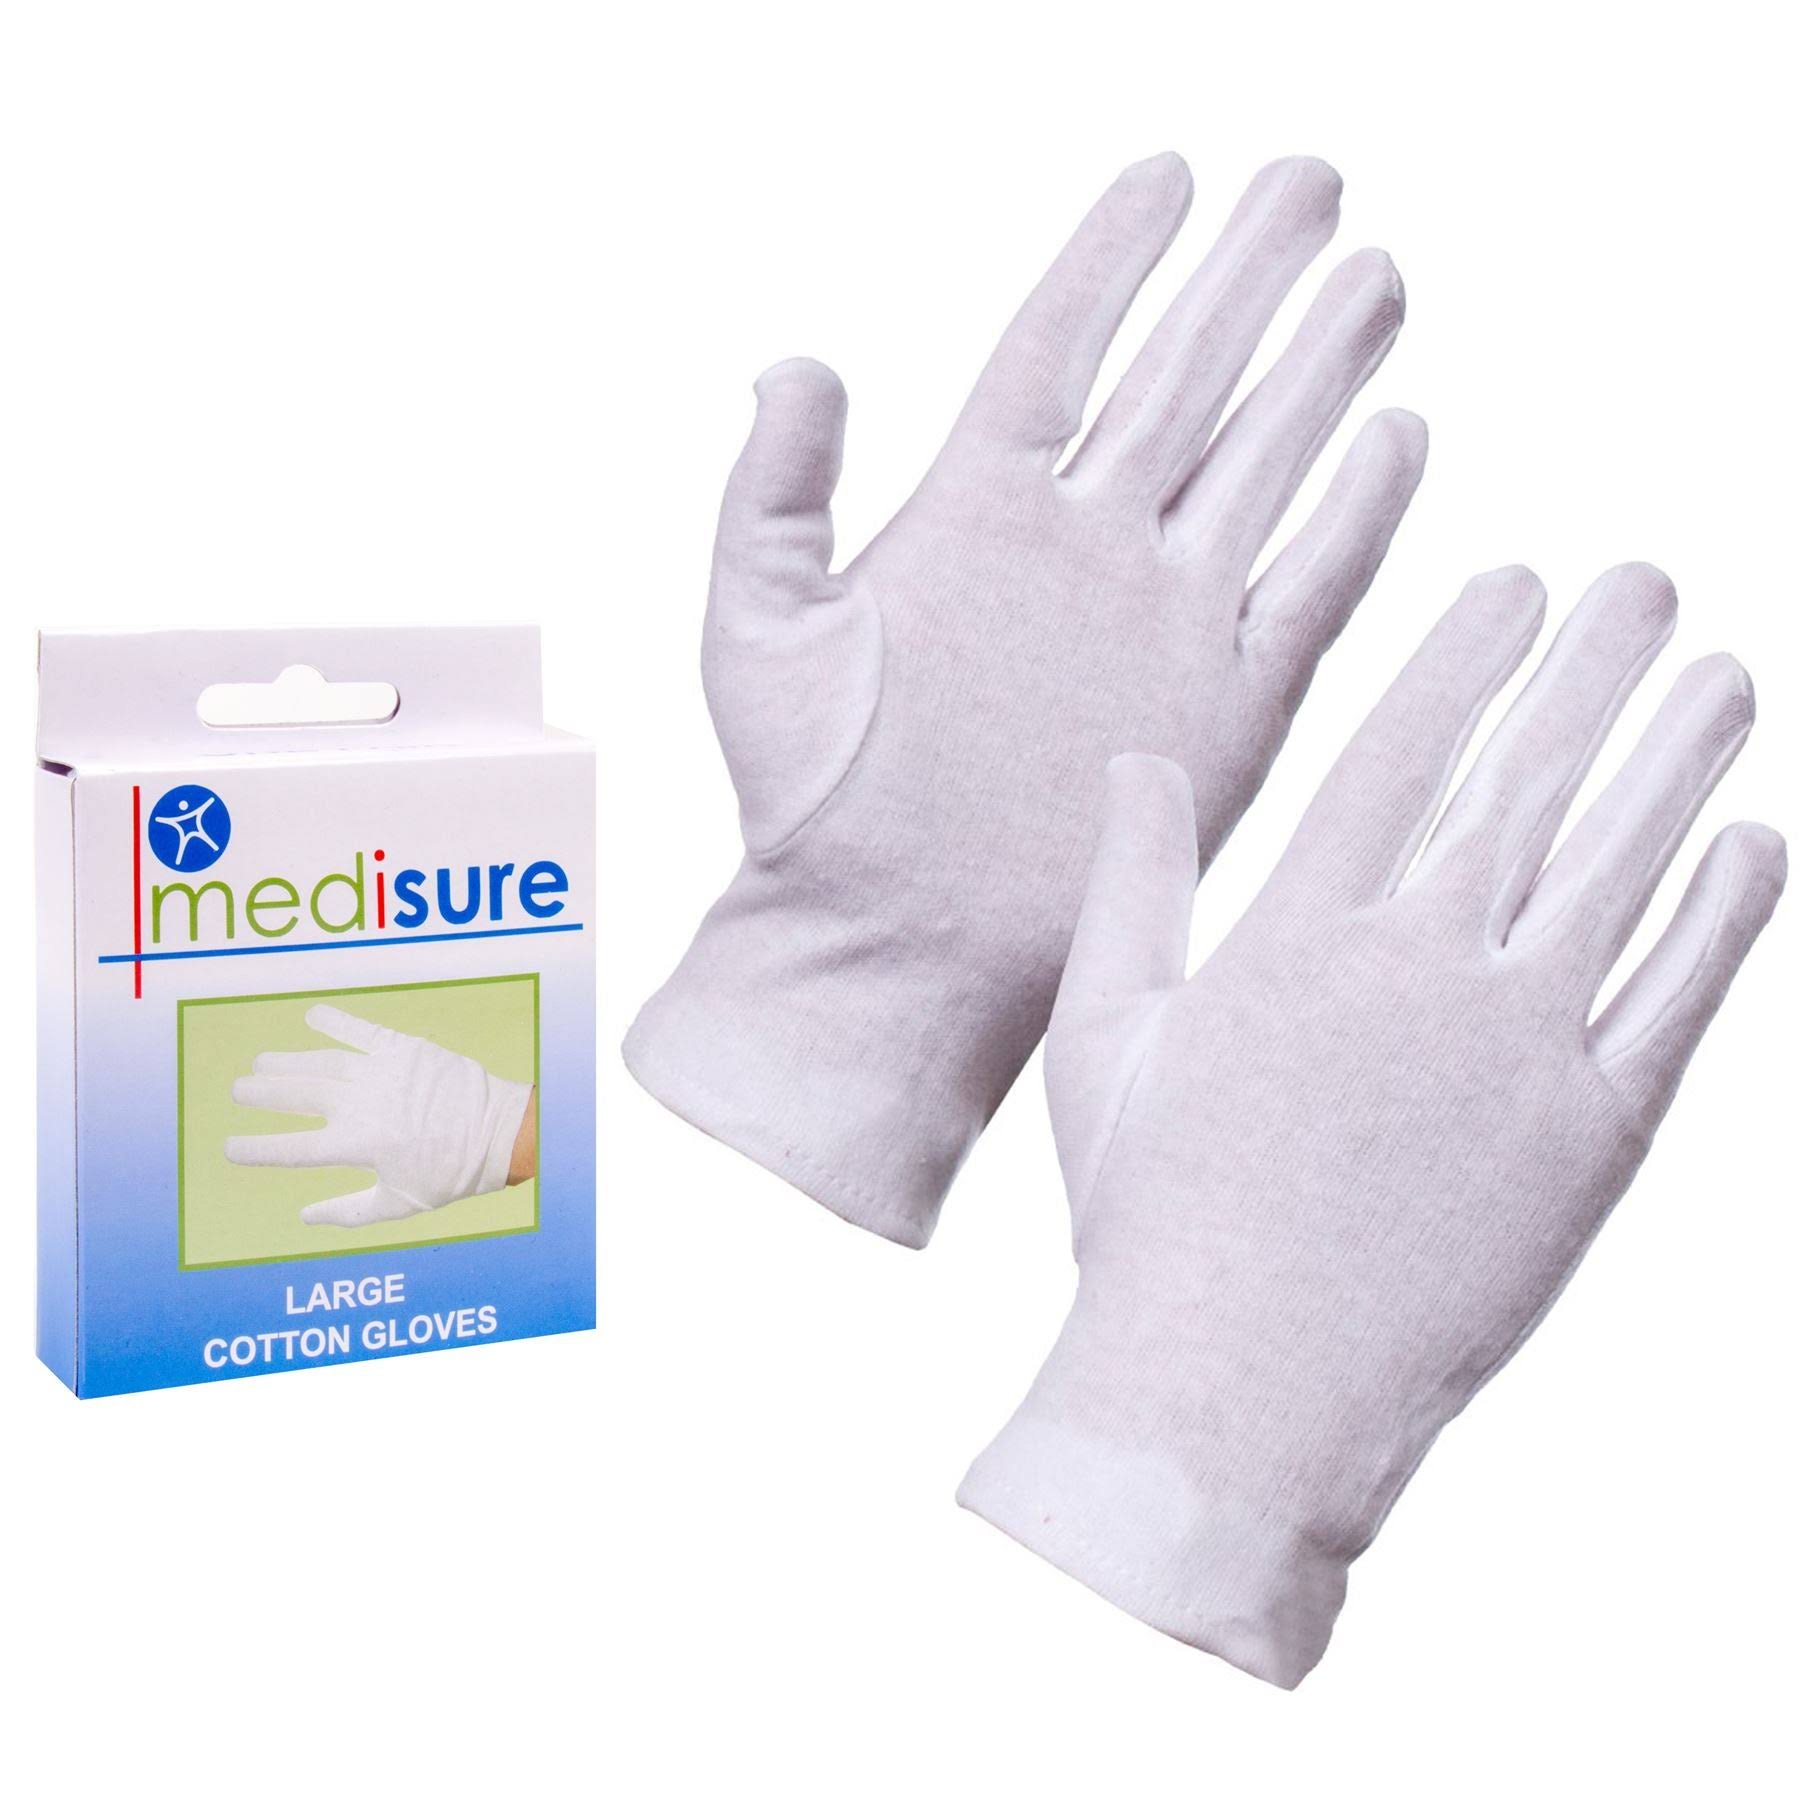 Medisure Cotton Gloves Large